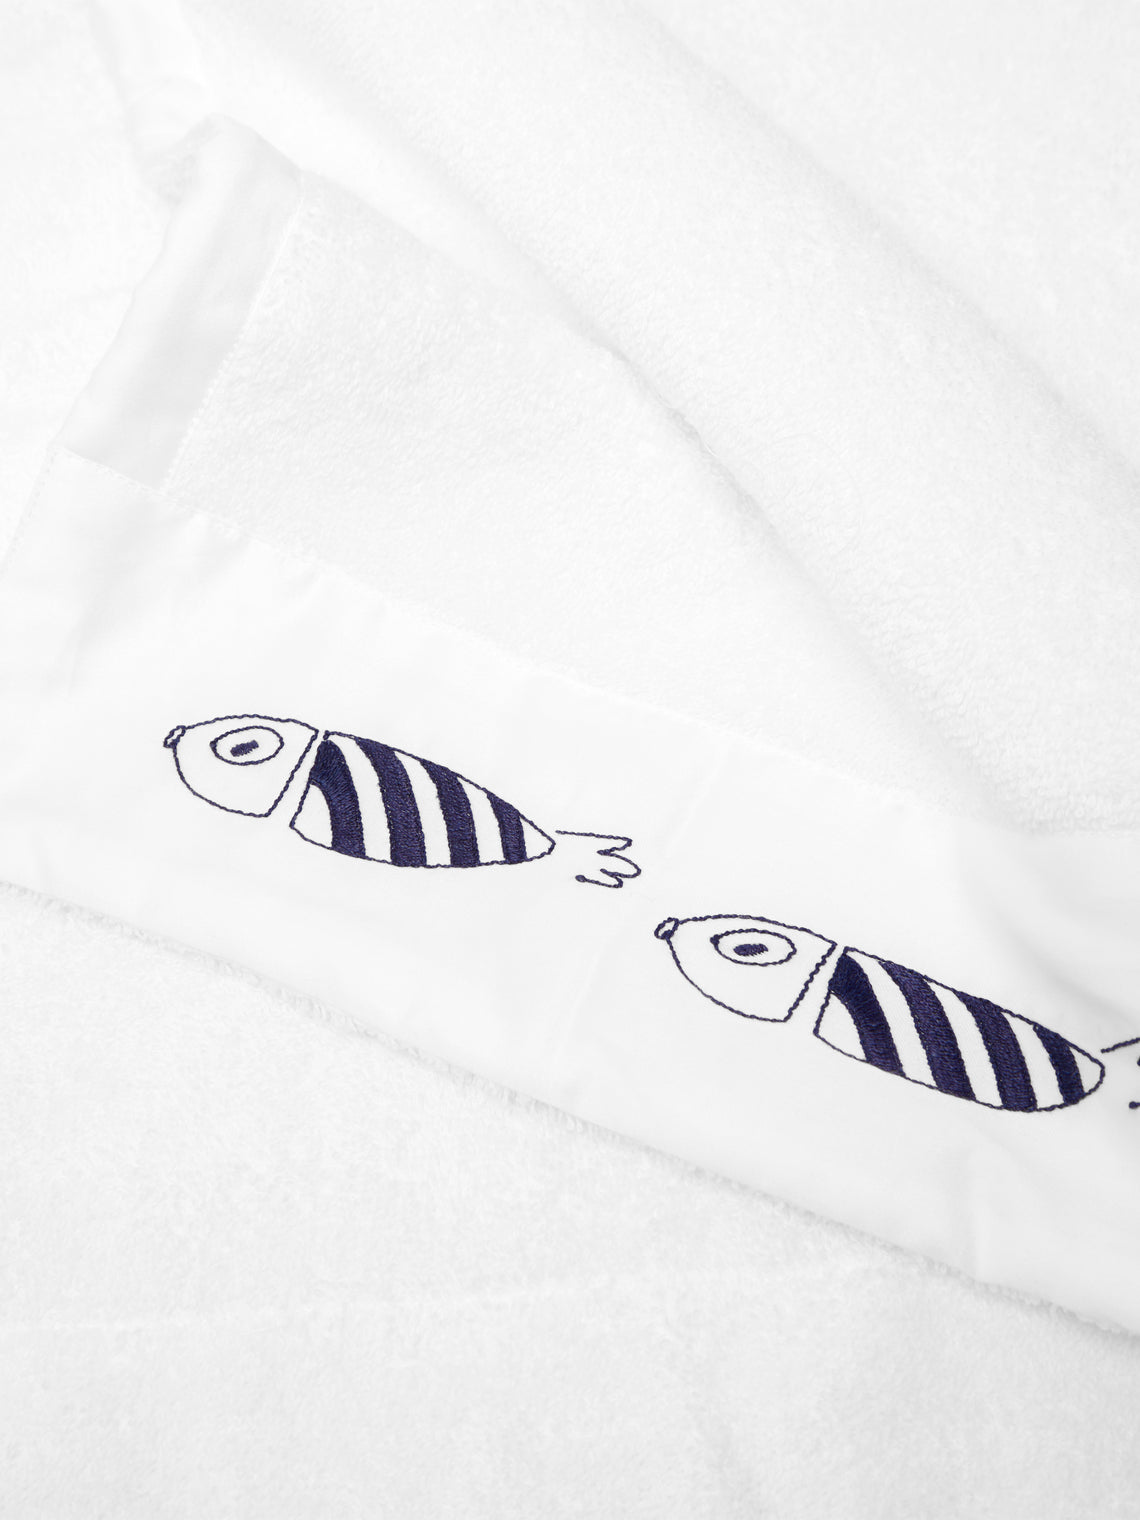 Loretta Caponi - Striped Fish Hand-Embroidered Cotton Towel Collection -  - ABASK